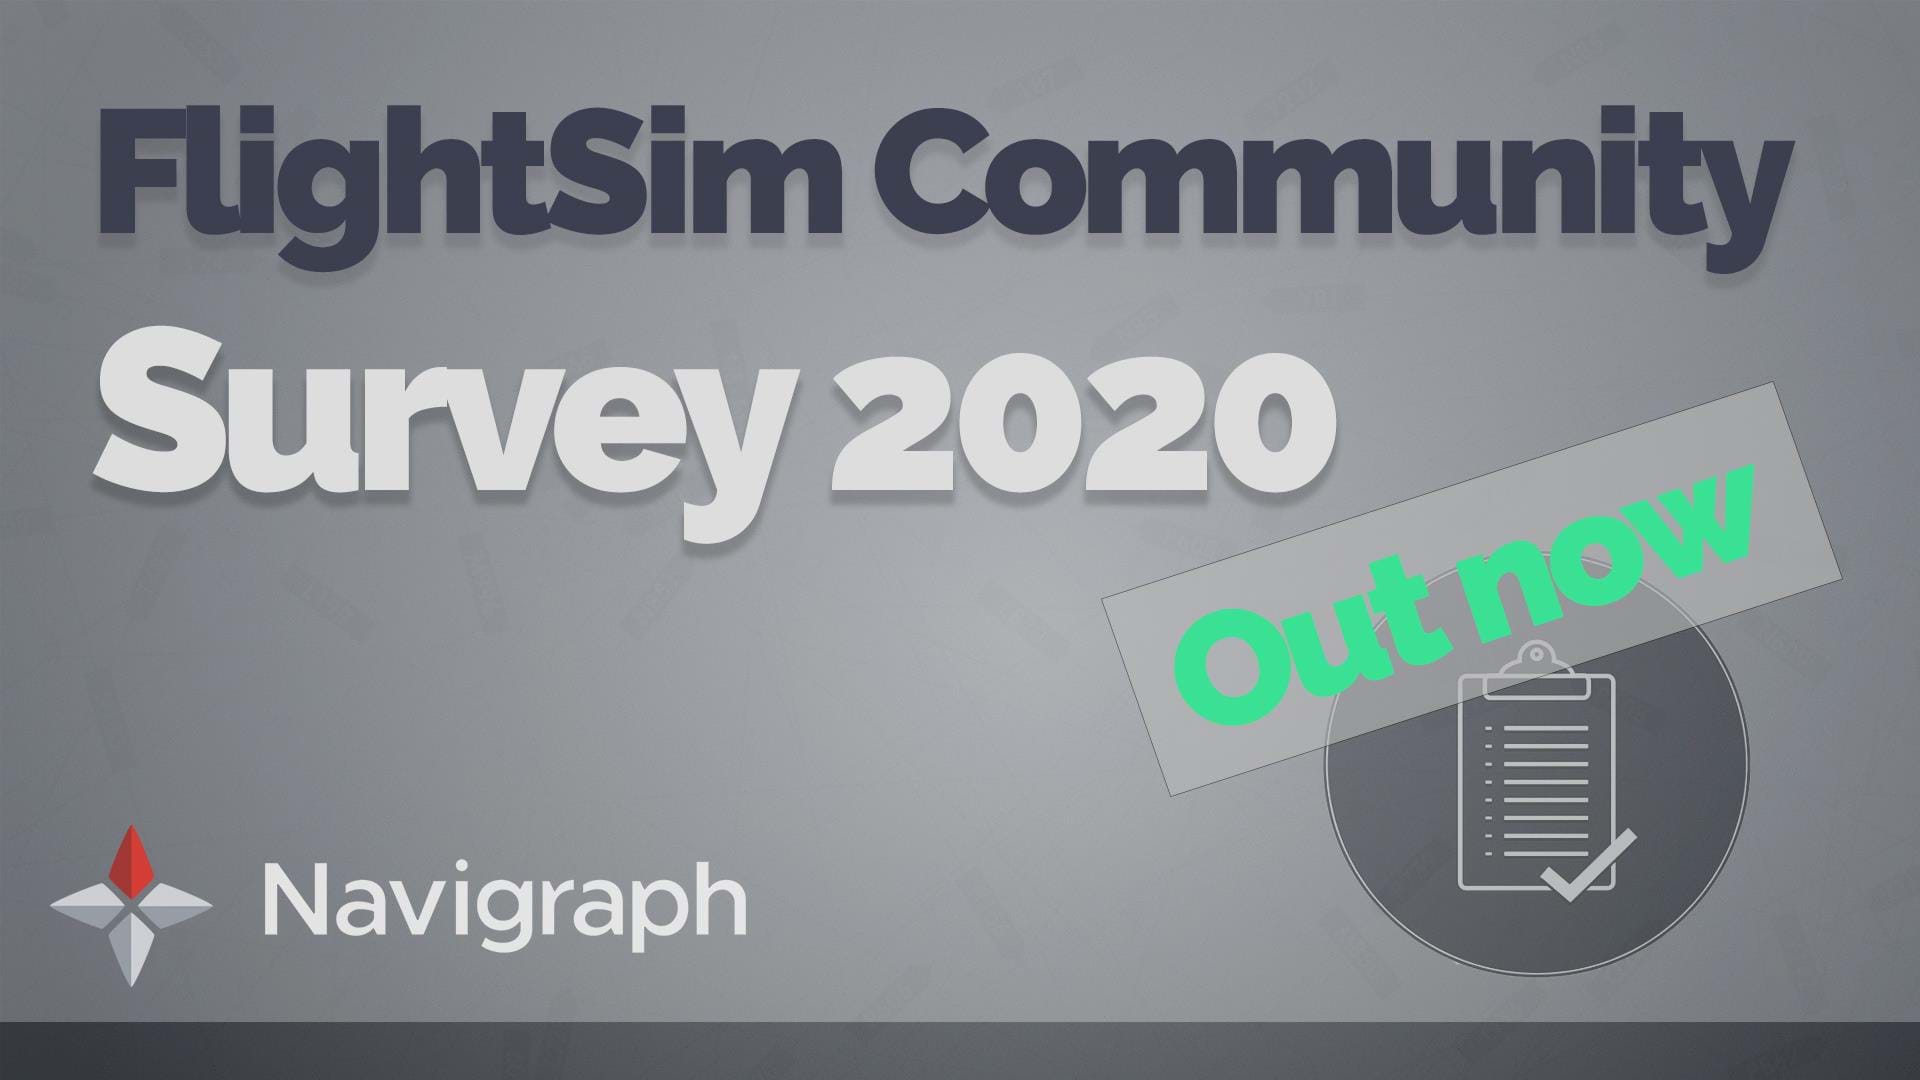 Navigraph’s FlightSim Community Survey 2020